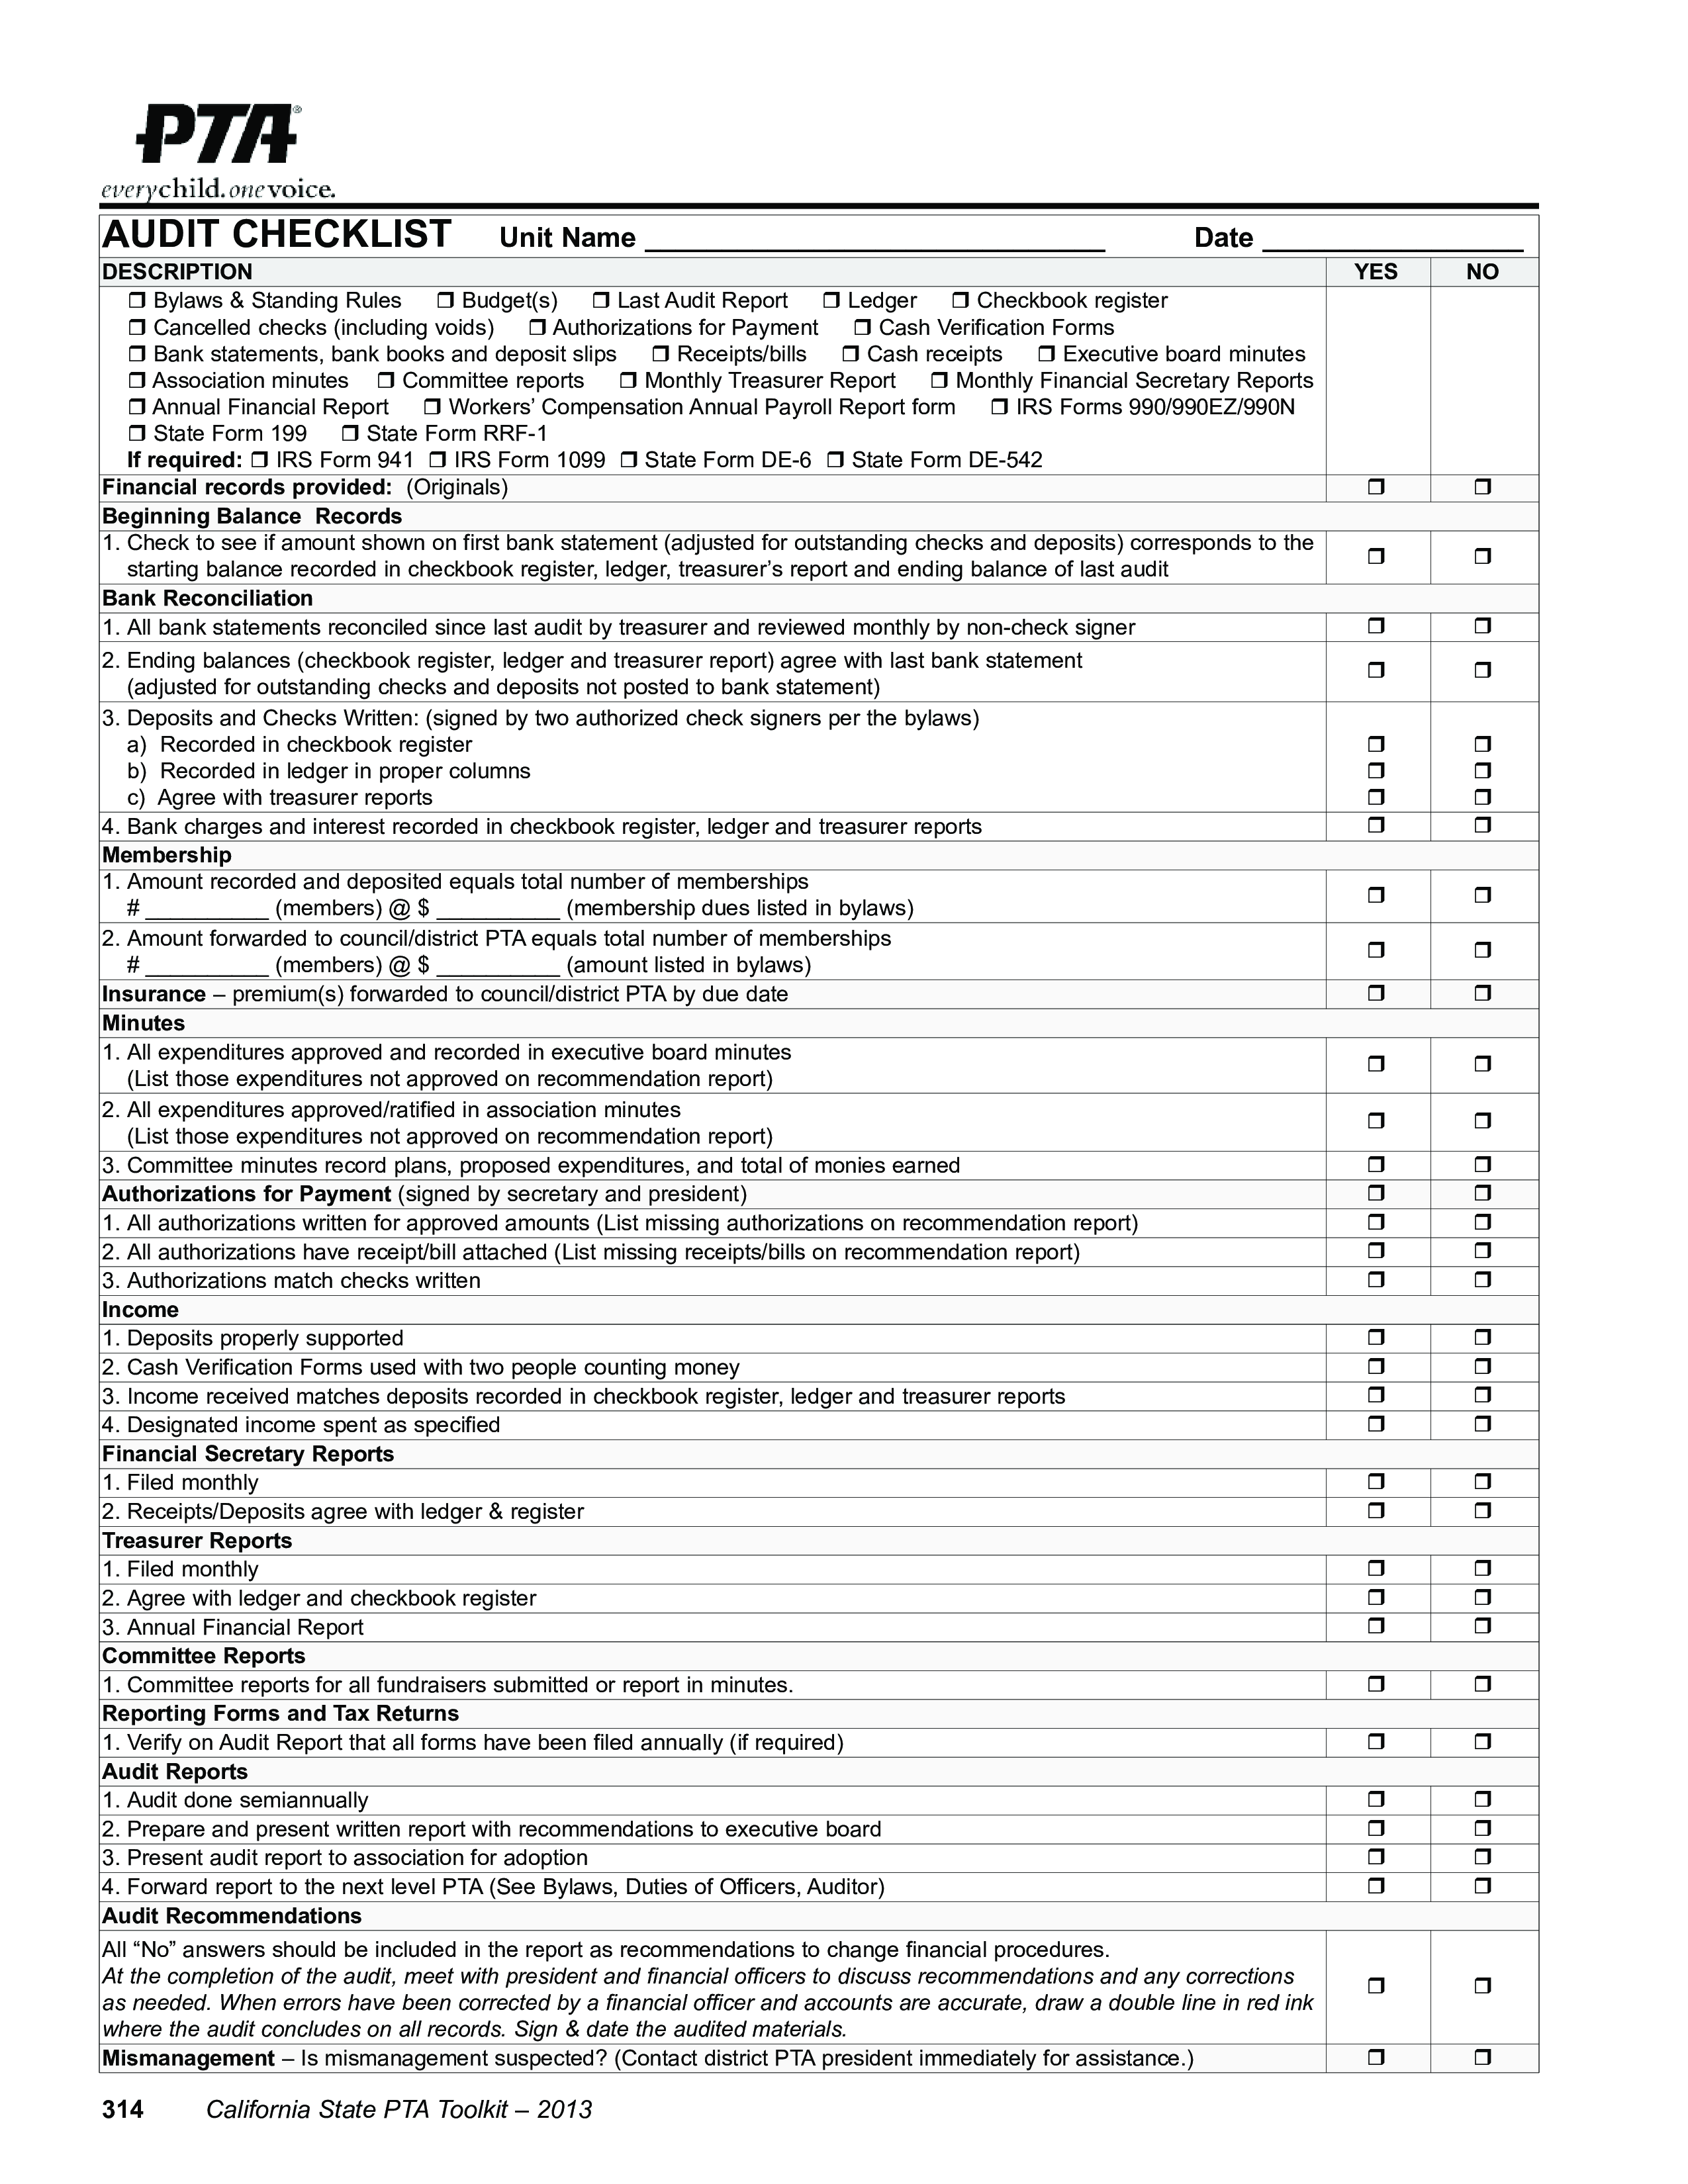 Audit Checklist sample 模板